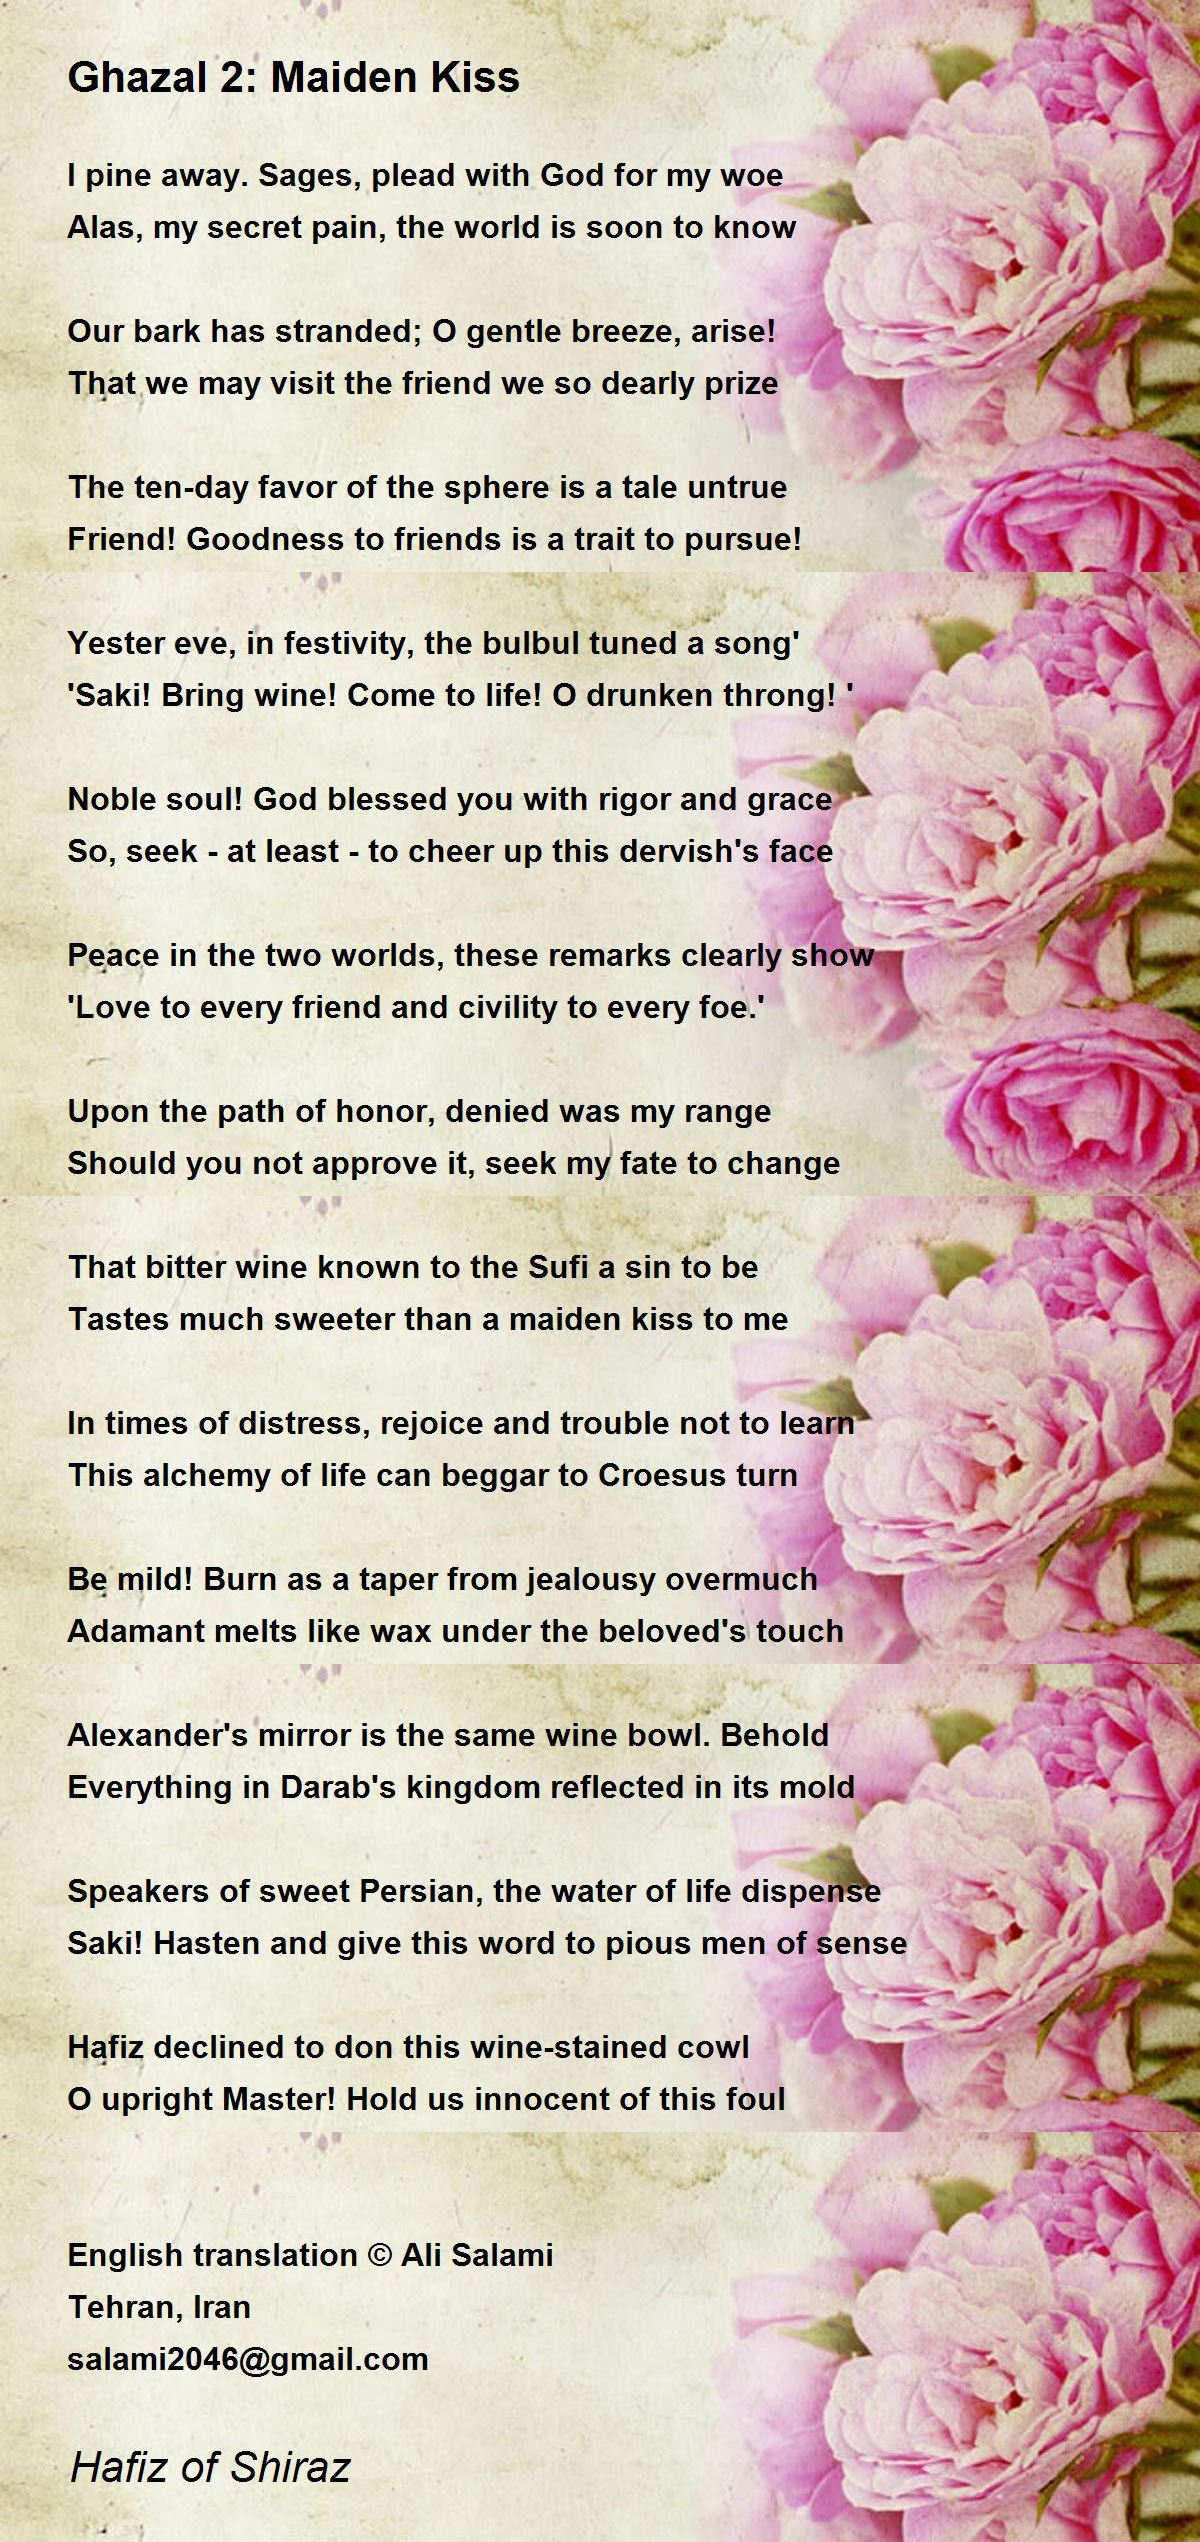 Ghazal 2: Maiden Kiss - Ghazal 2: Maiden Kiss Poem by Hafiz of Shiraz